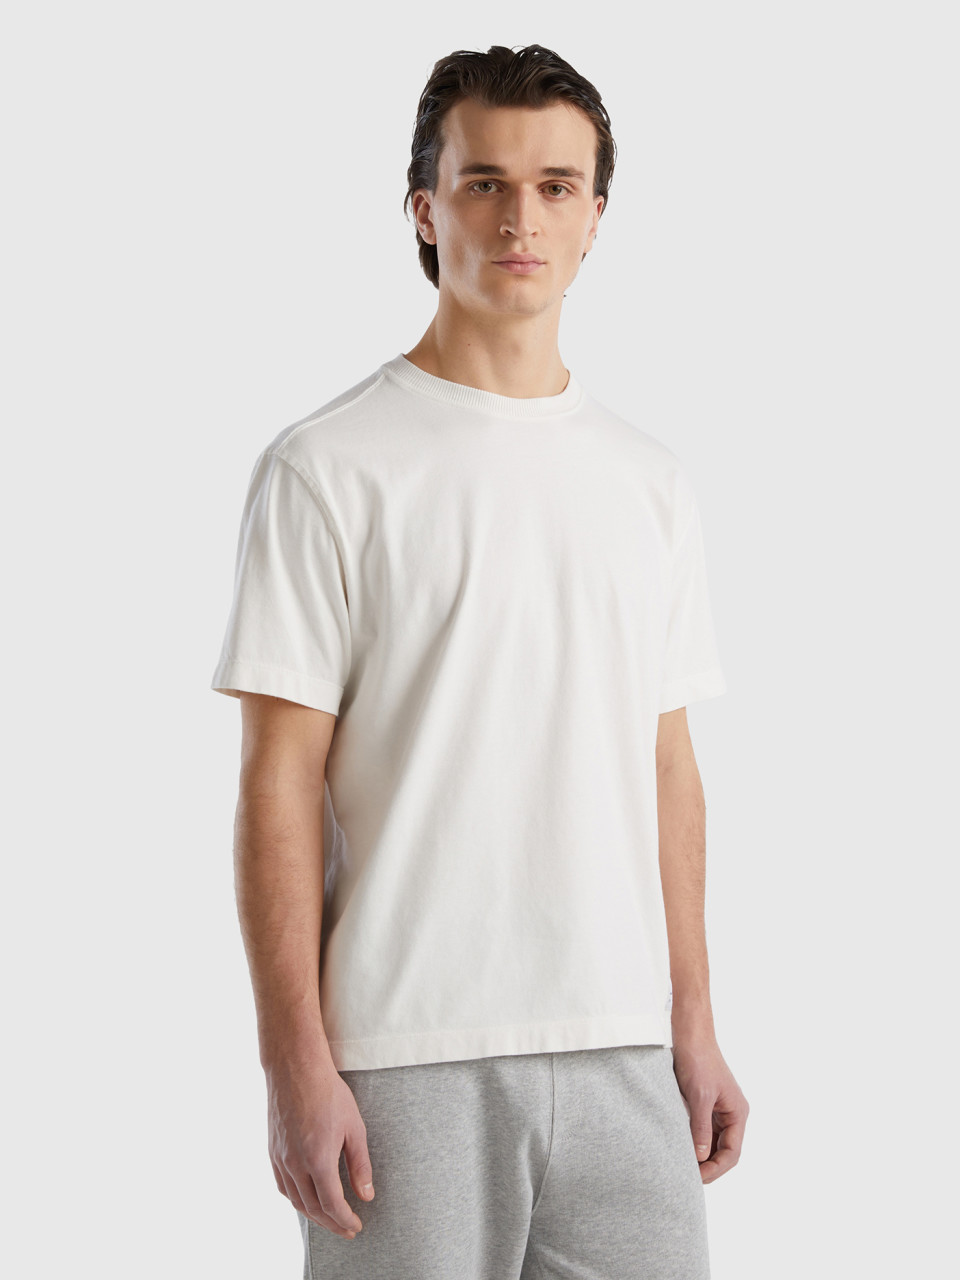 Benetton, 100% Organic Cotton Crew Neck T-shirt, Creamy White, Men